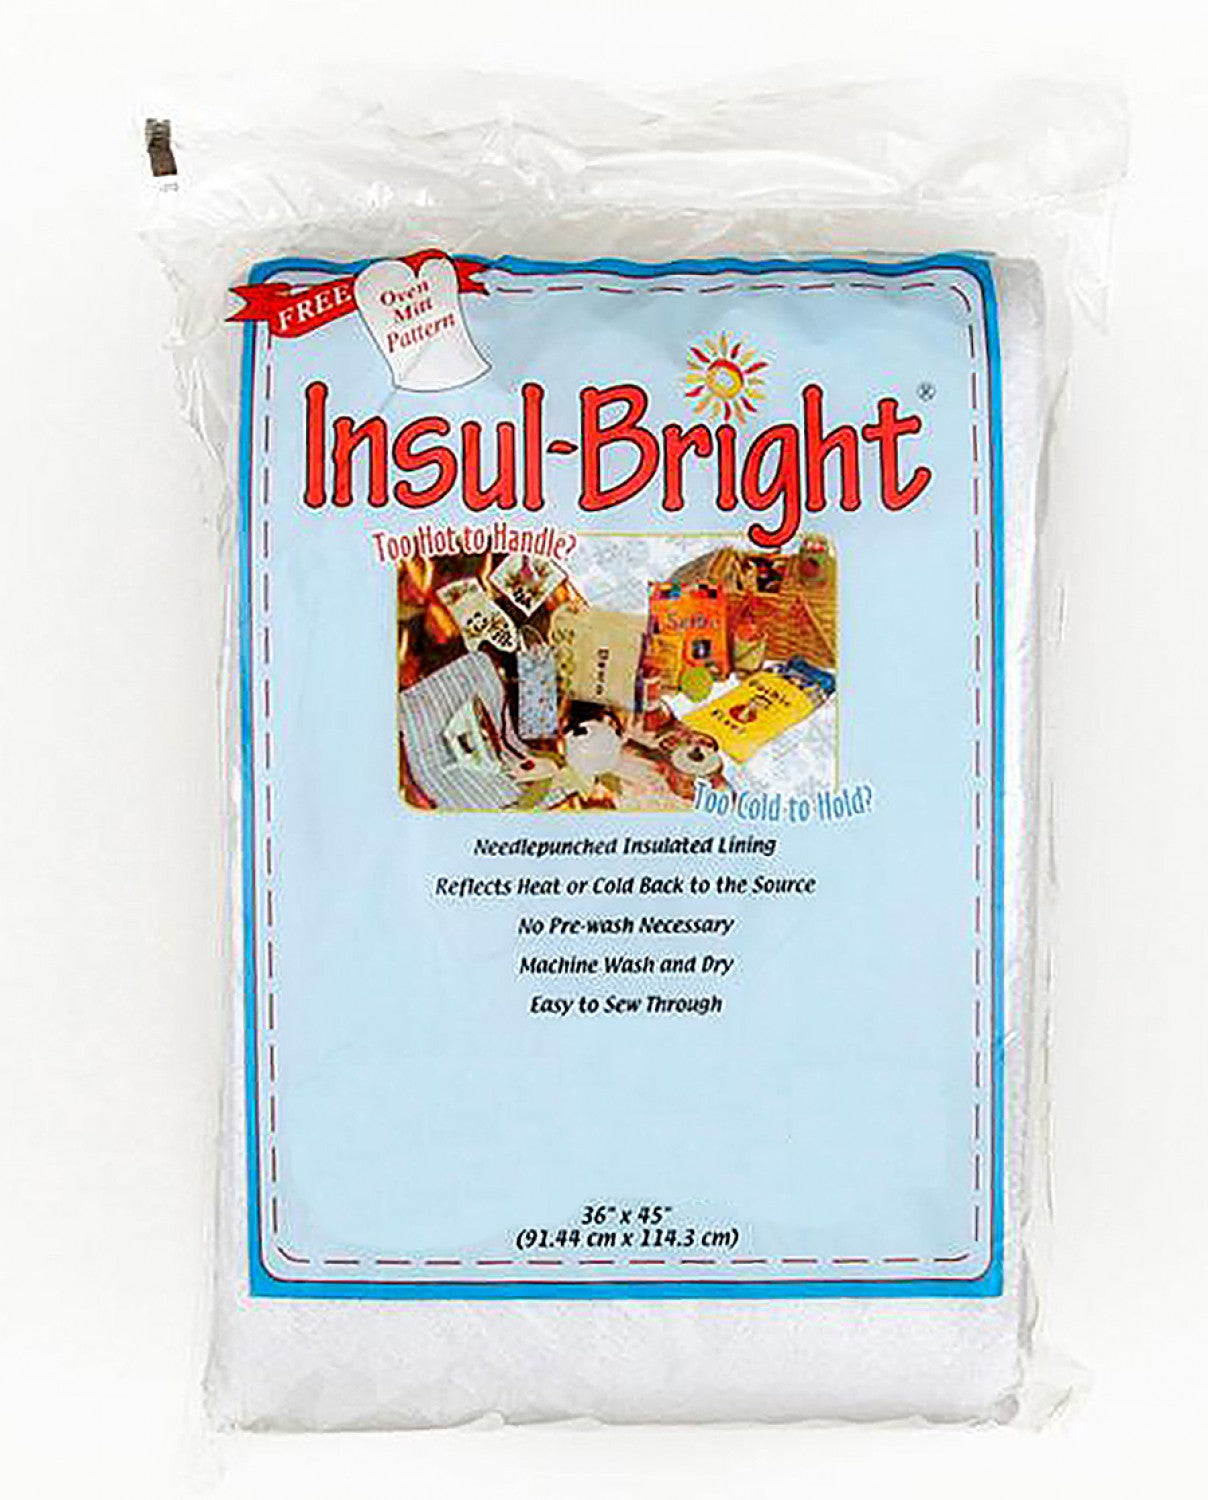 Insul-Bright Package 45